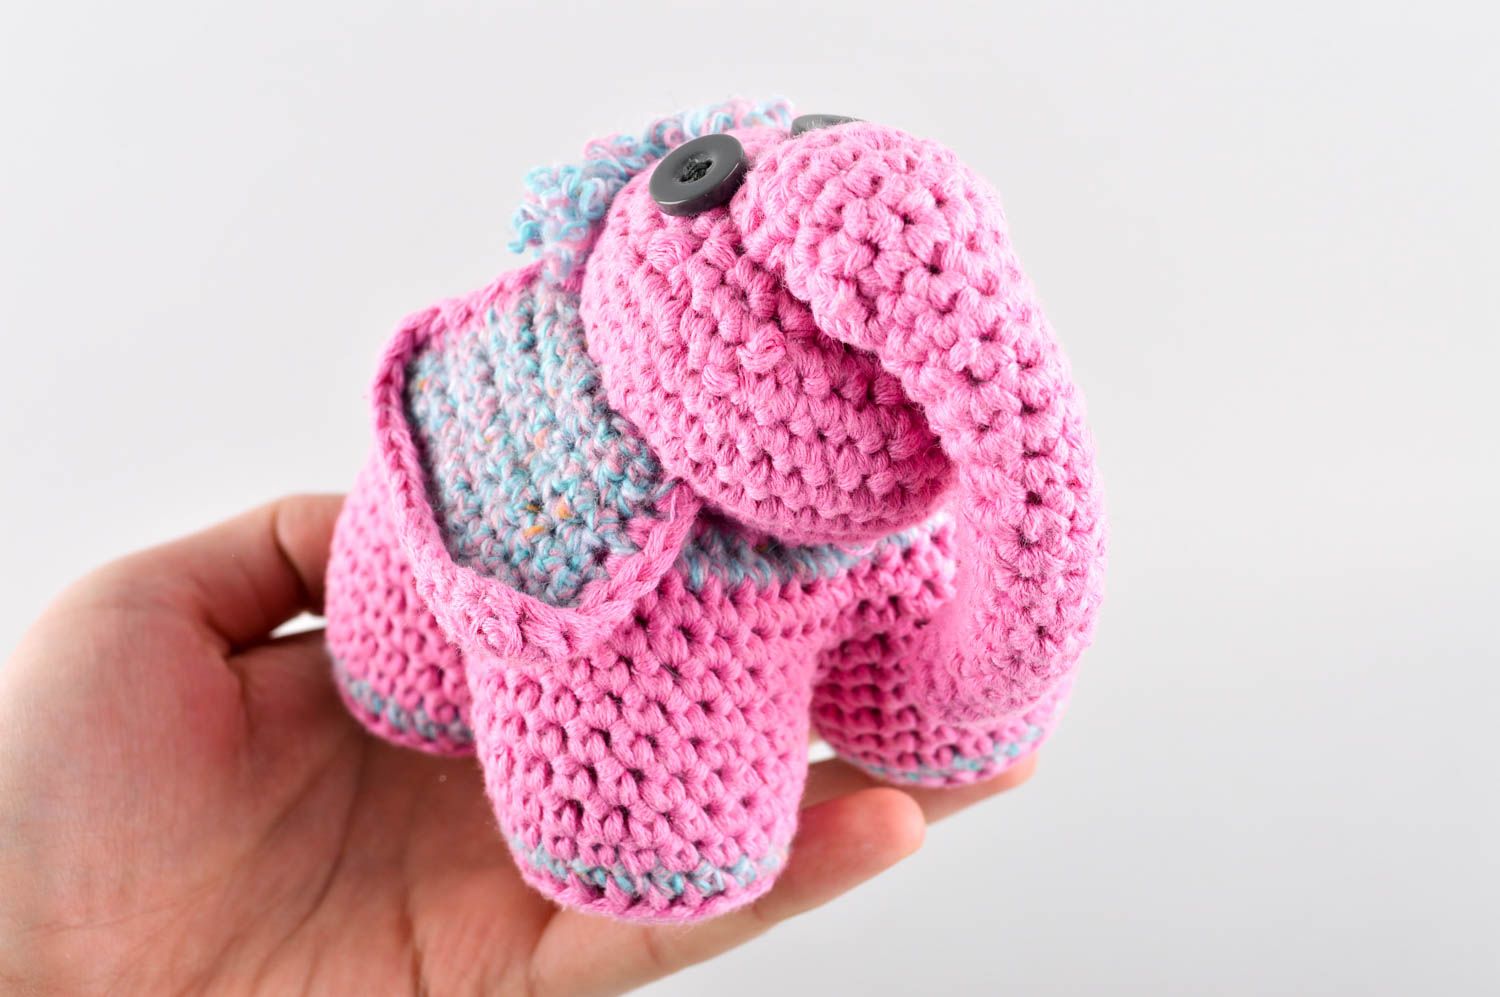 Handmade toy stuffed toy crocheted toy for babies soft nursery decor photo 5